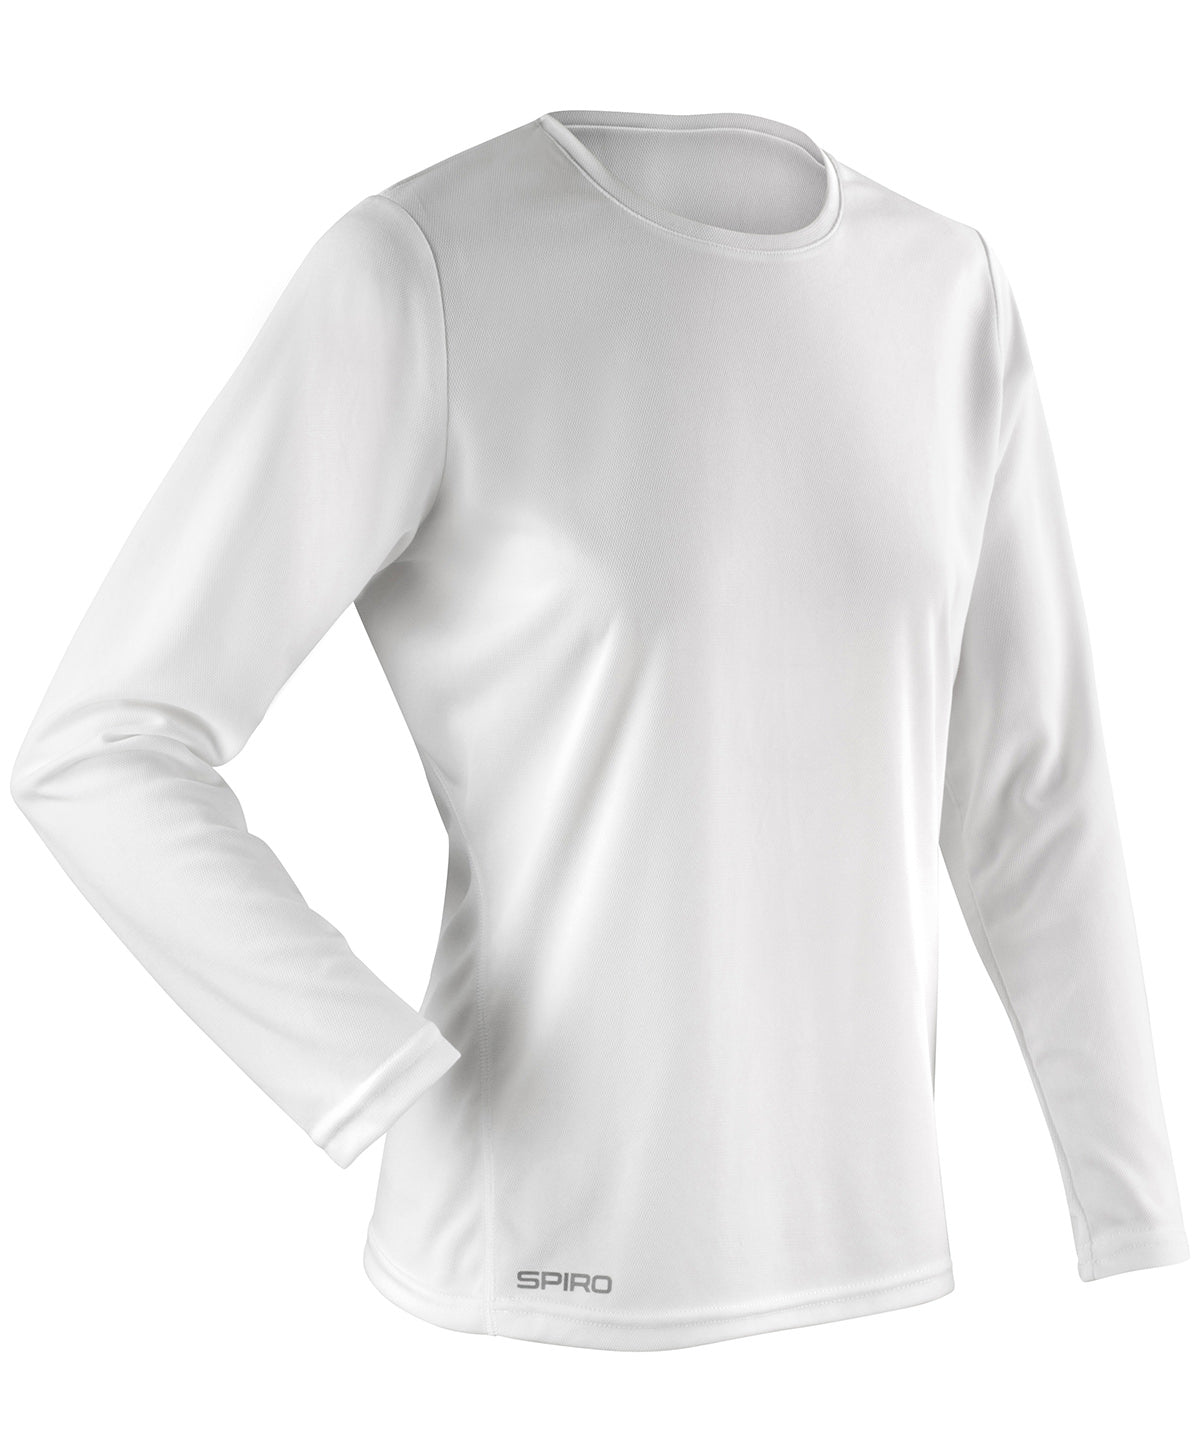 Personalised T-Shirts - Black Spiro Women's Spiro quick-dry long sleeve t-shirt